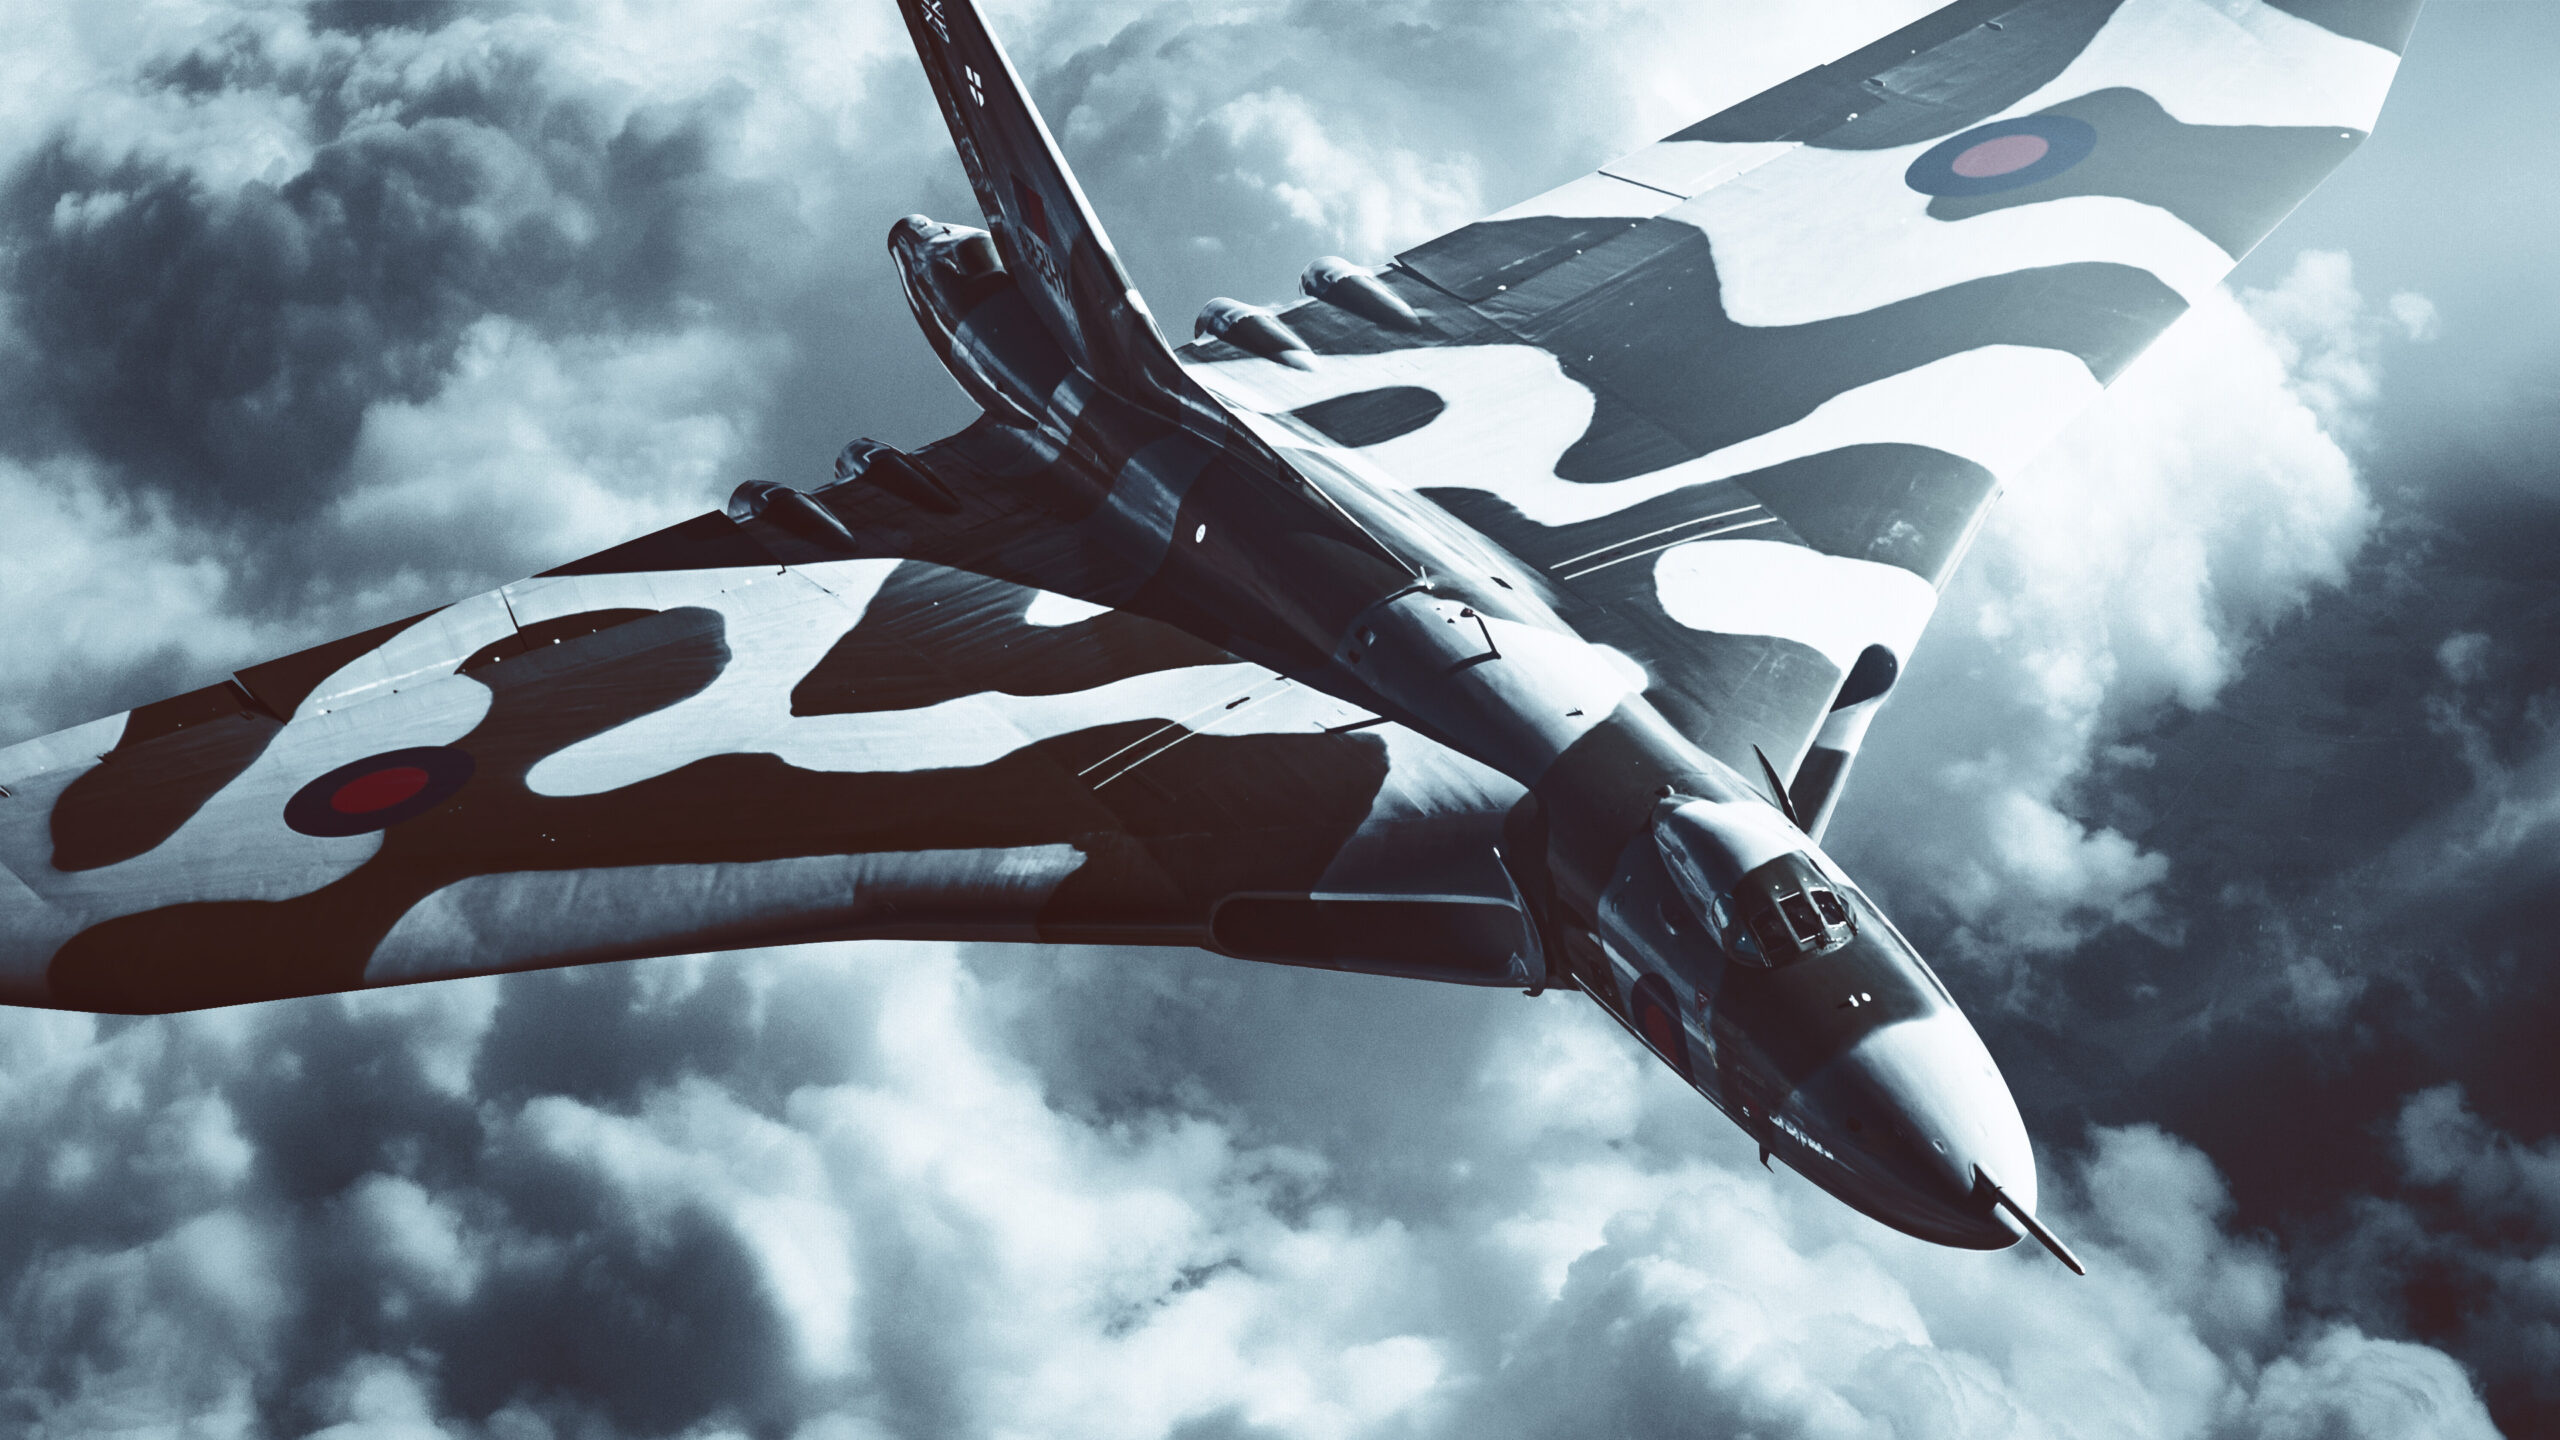 Avro Vulcan, Fighter pilot podcast, Aviation enthusiasts, Historical aircraft, 2560x1440 HD Desktop